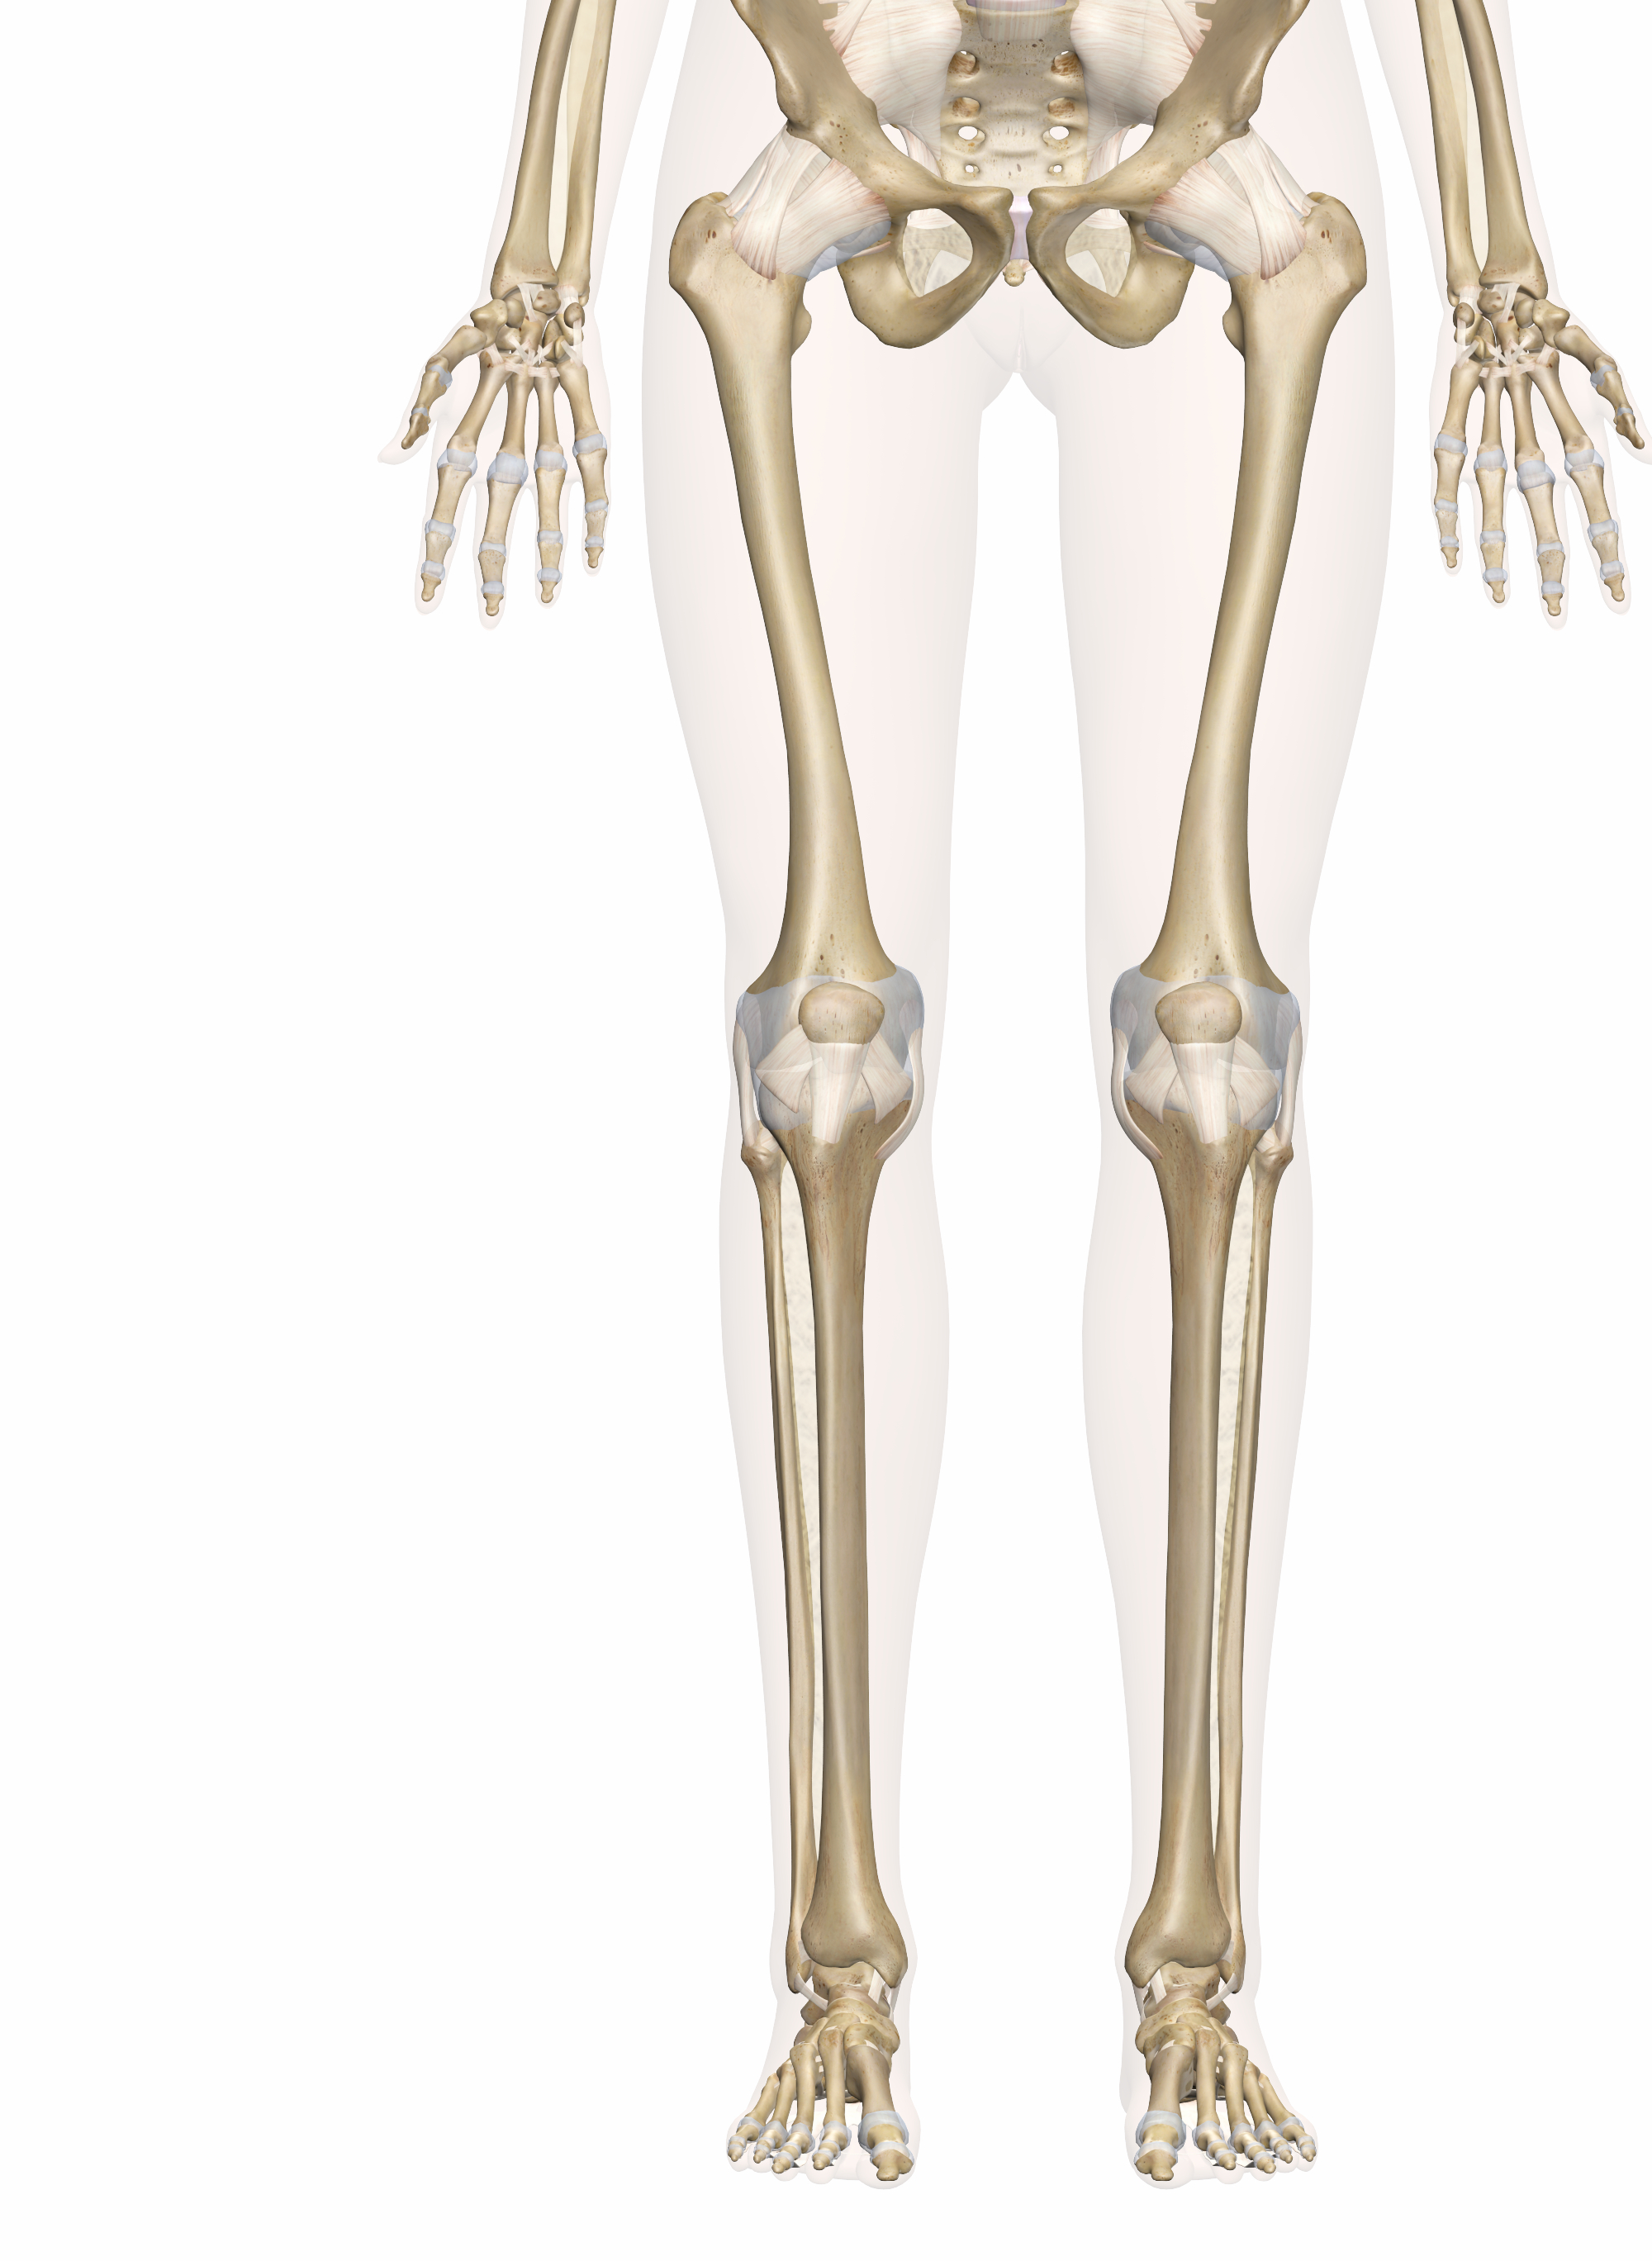 Foot Bones Diagram Bones Of The Leg And Foot Interactive Anatomy Guide